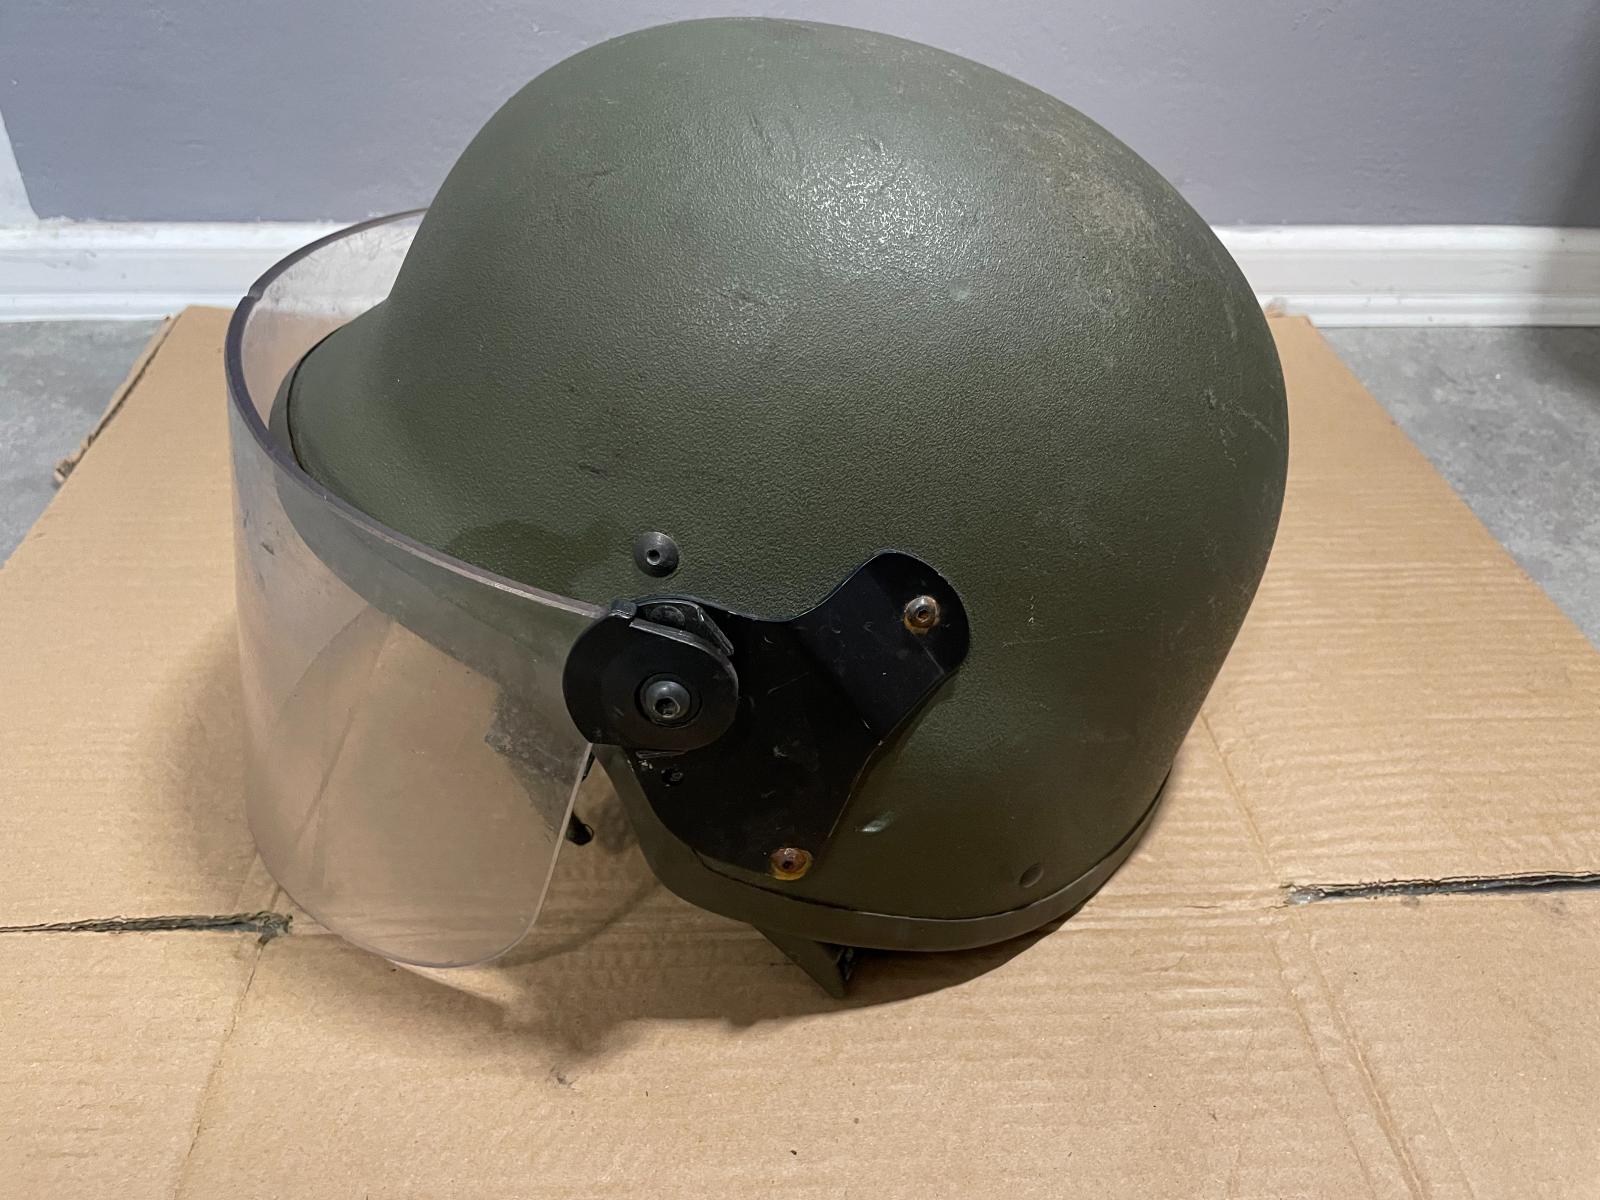 kevlarová prilba, helma, vojenská, Bundeswehr - Zberateľstvo